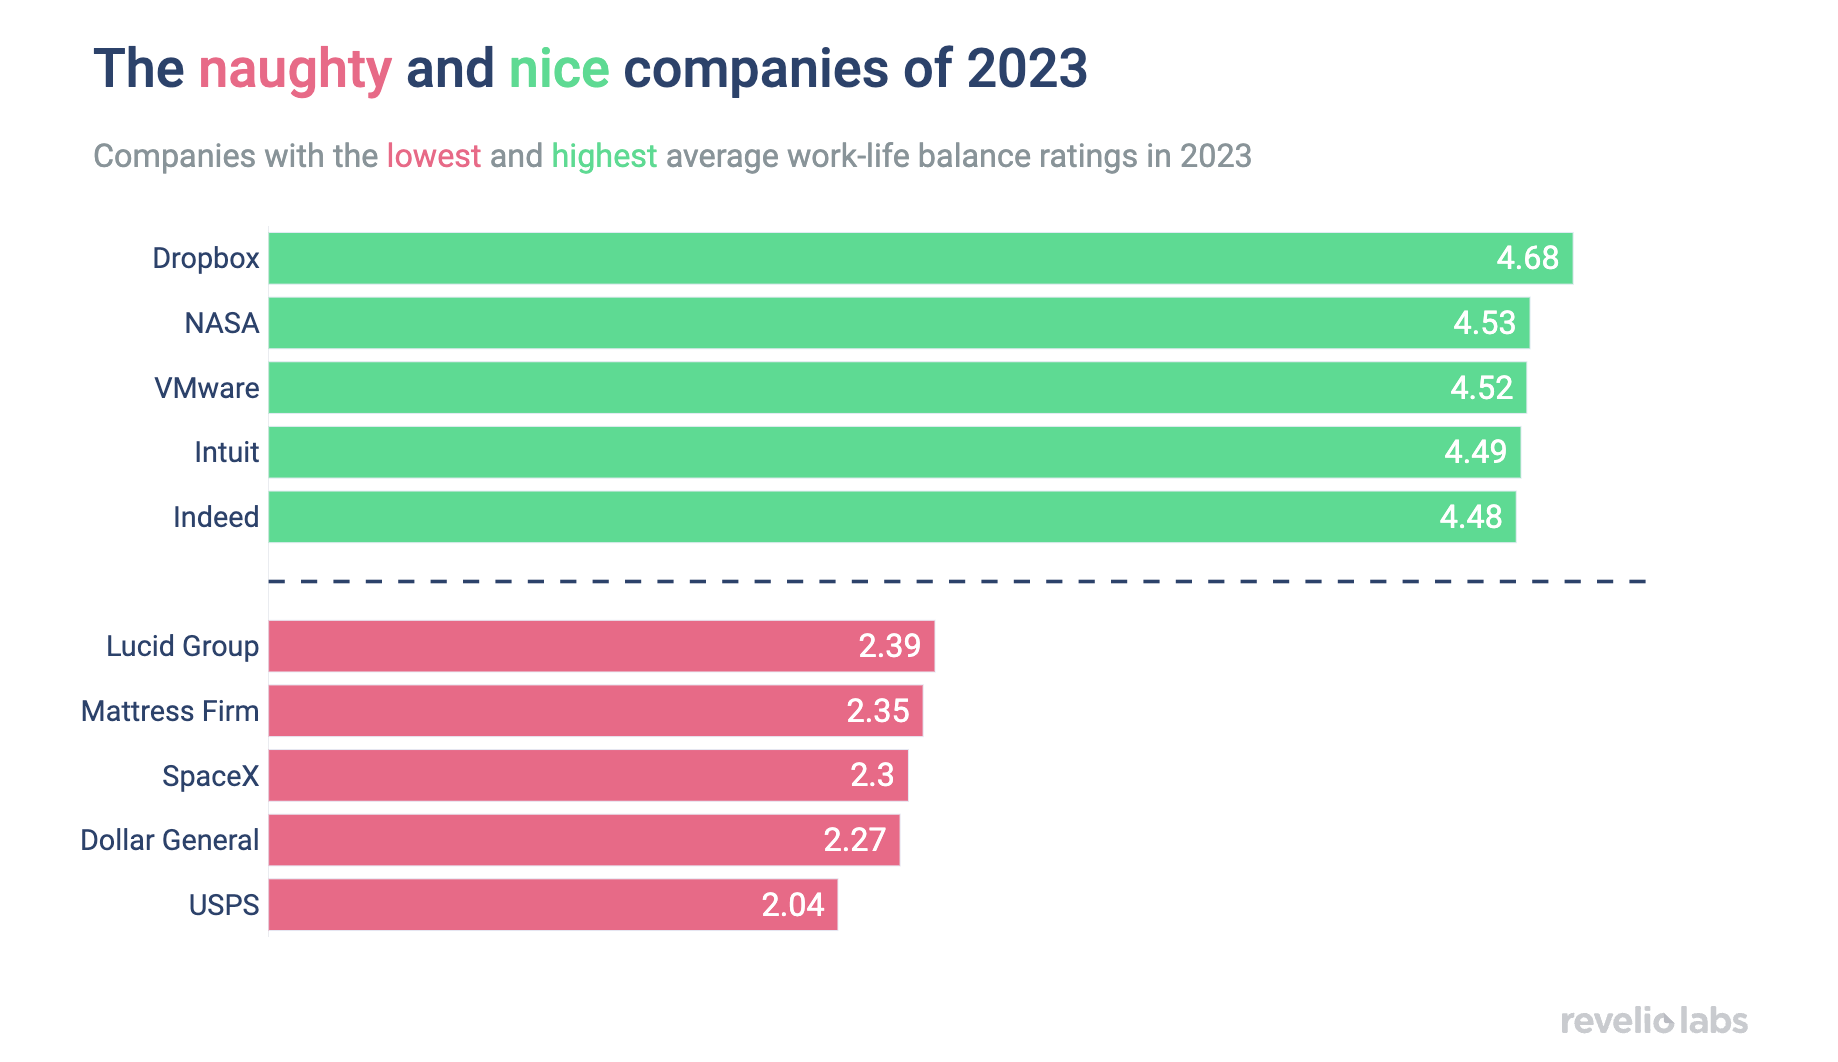 The naughty and nice companies of 2023